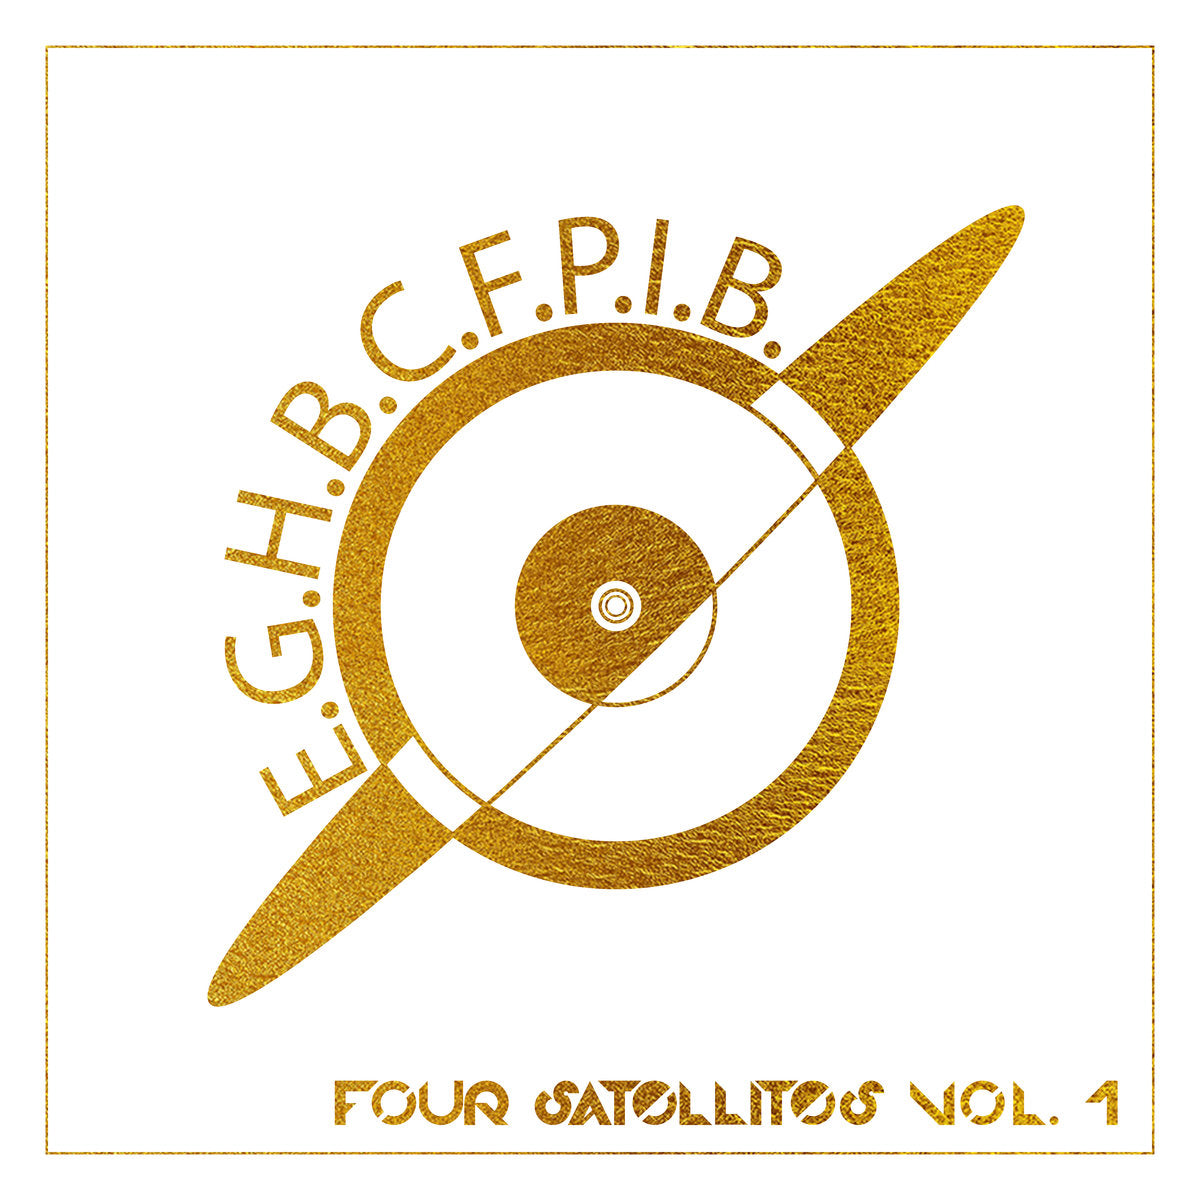 Earth Girl Helen Brown - Four Satellites Vol. 1 2LP